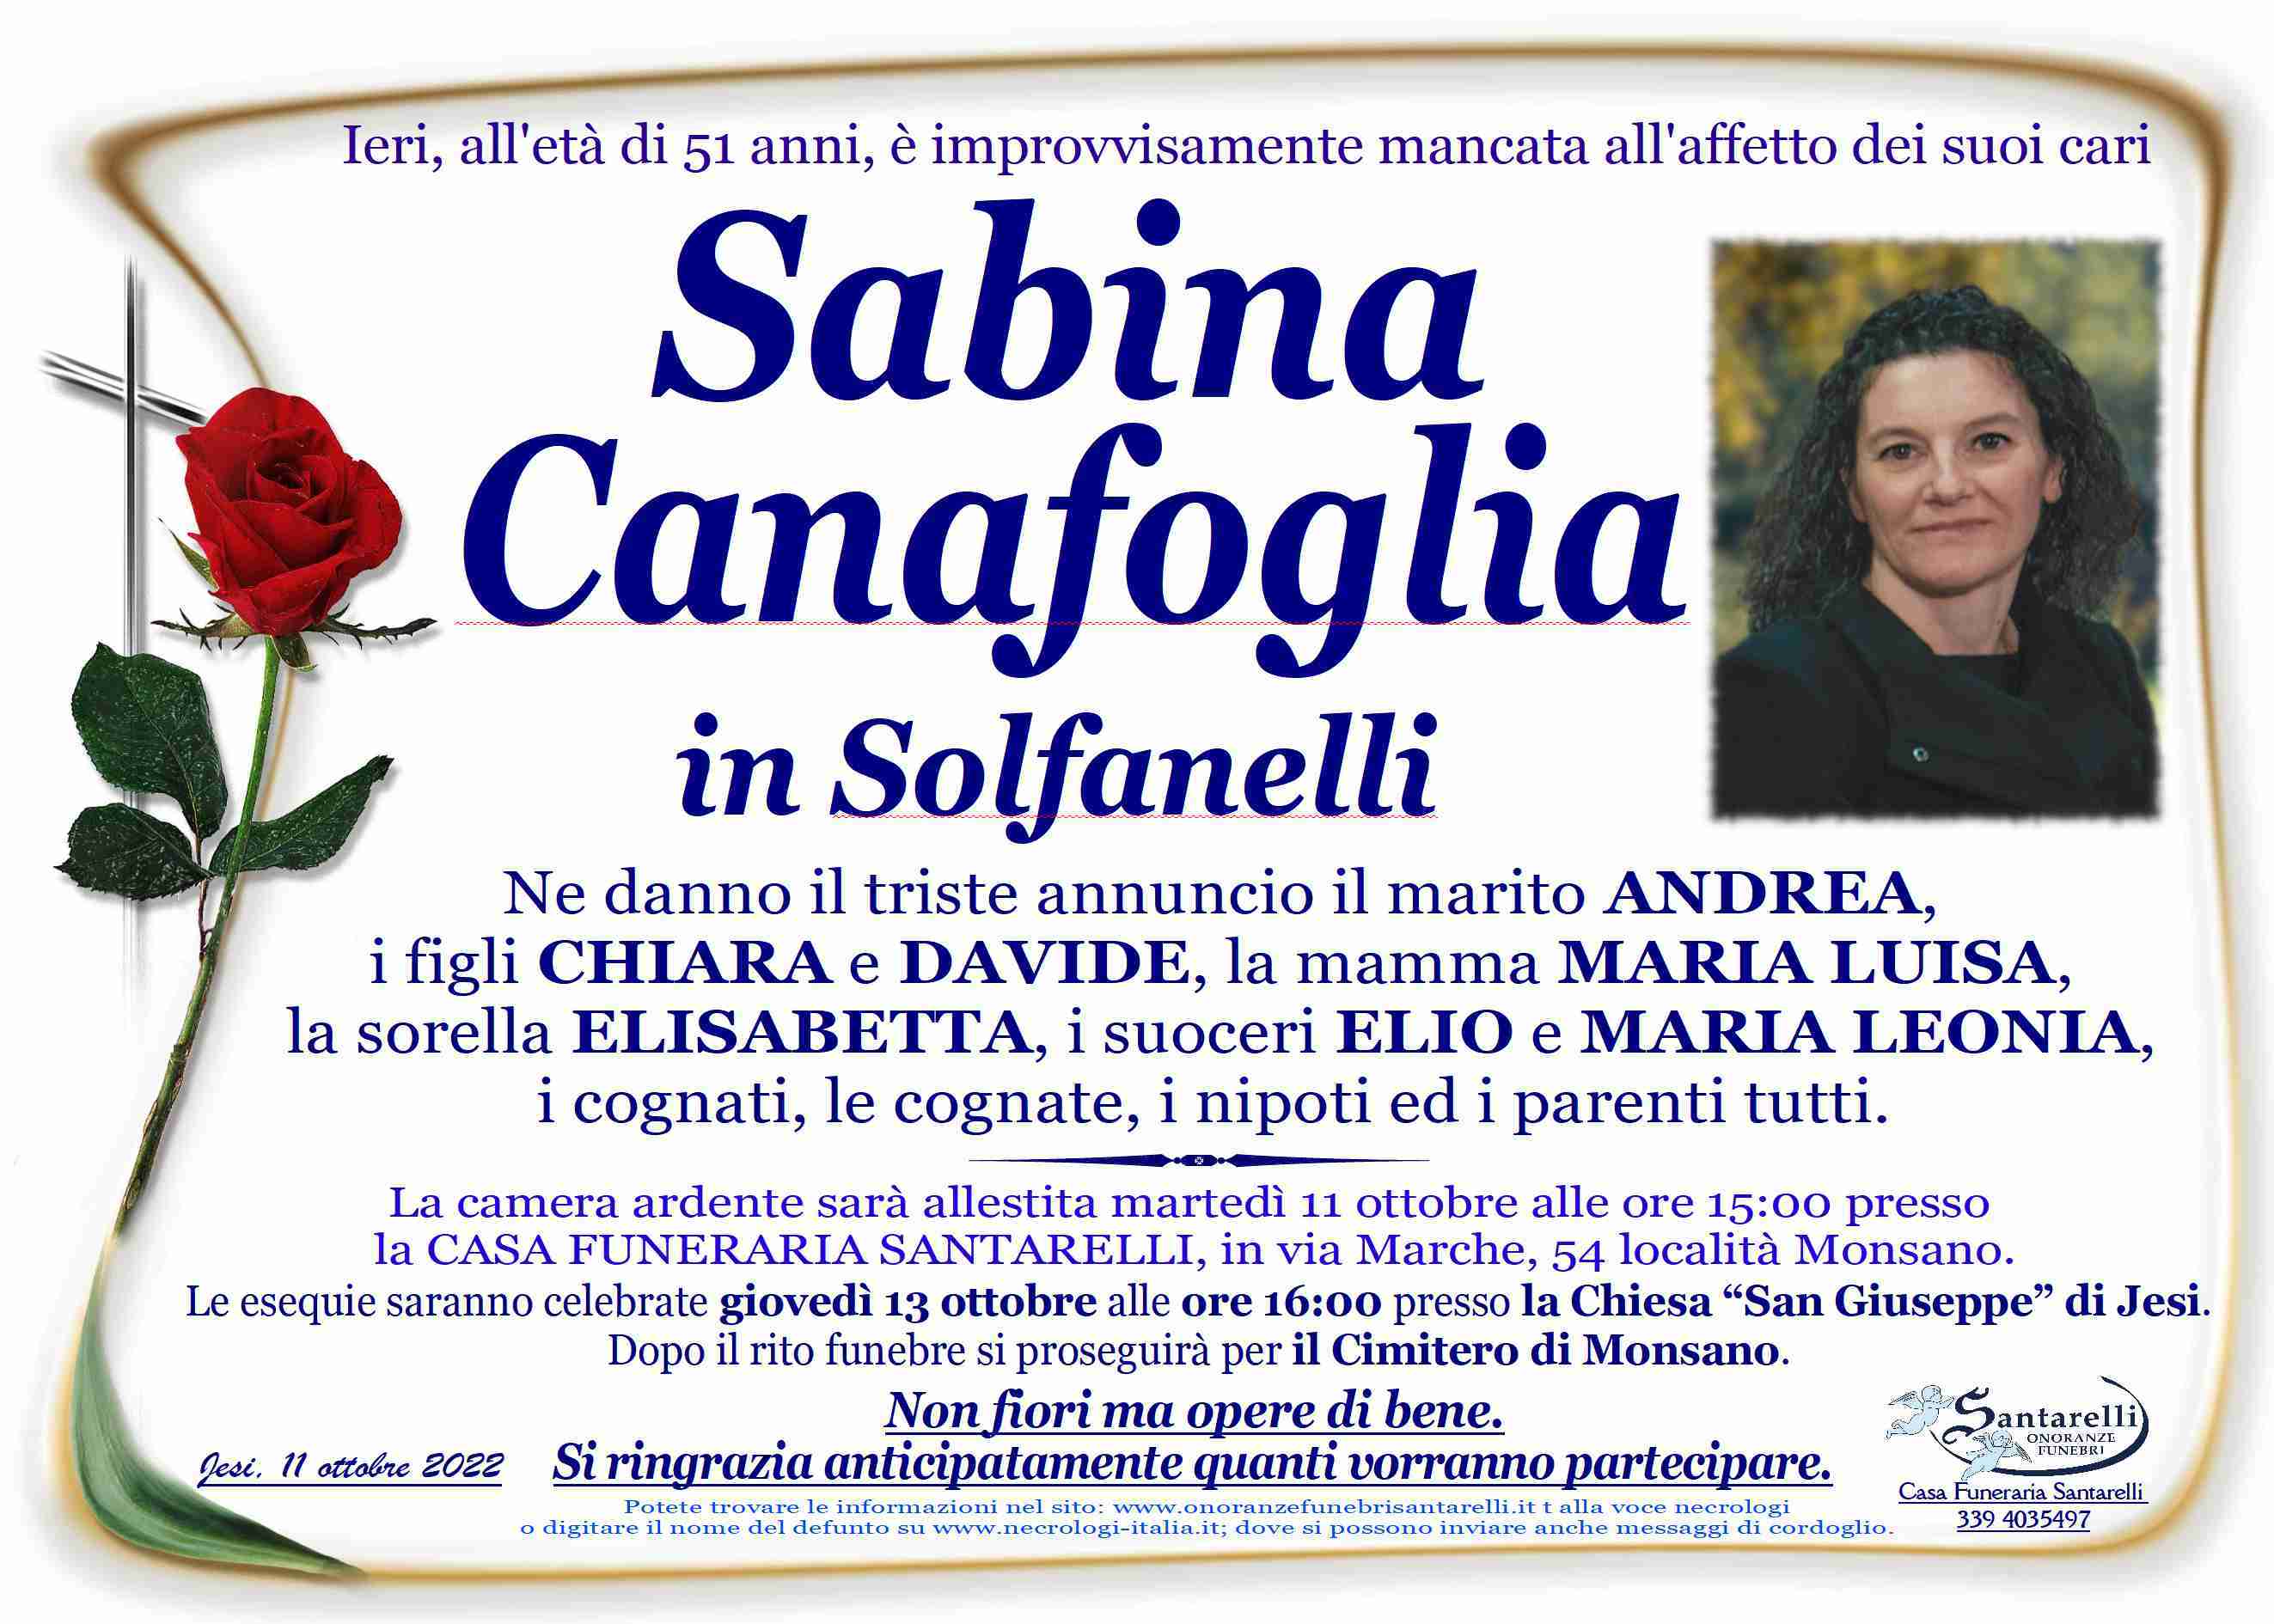 Sabina Canafoglia